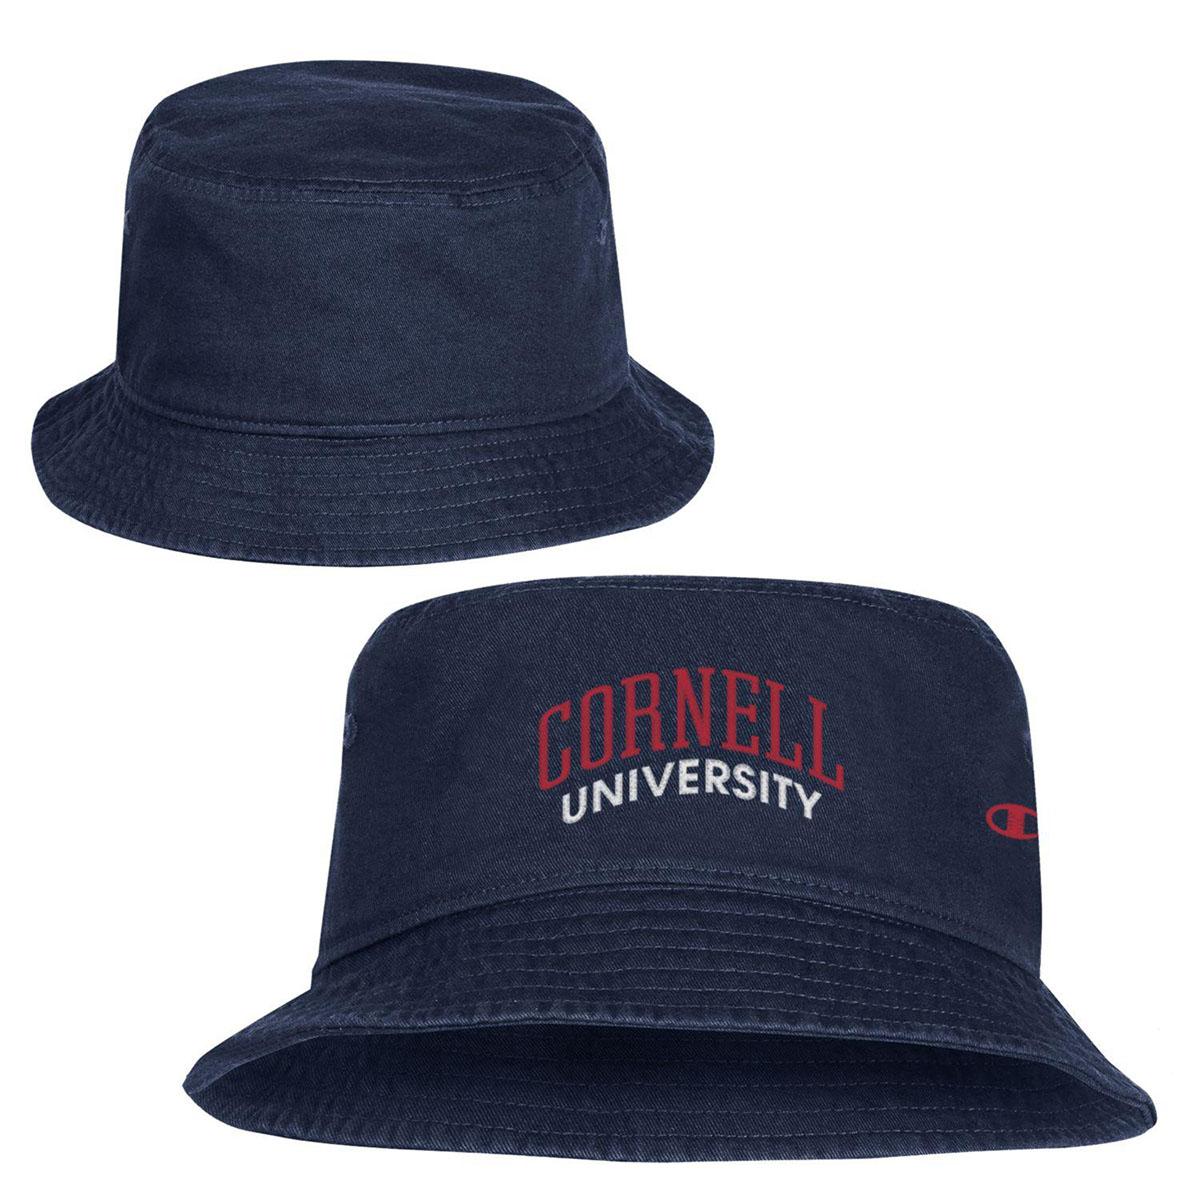 Cornell University Bucket Cap Blue